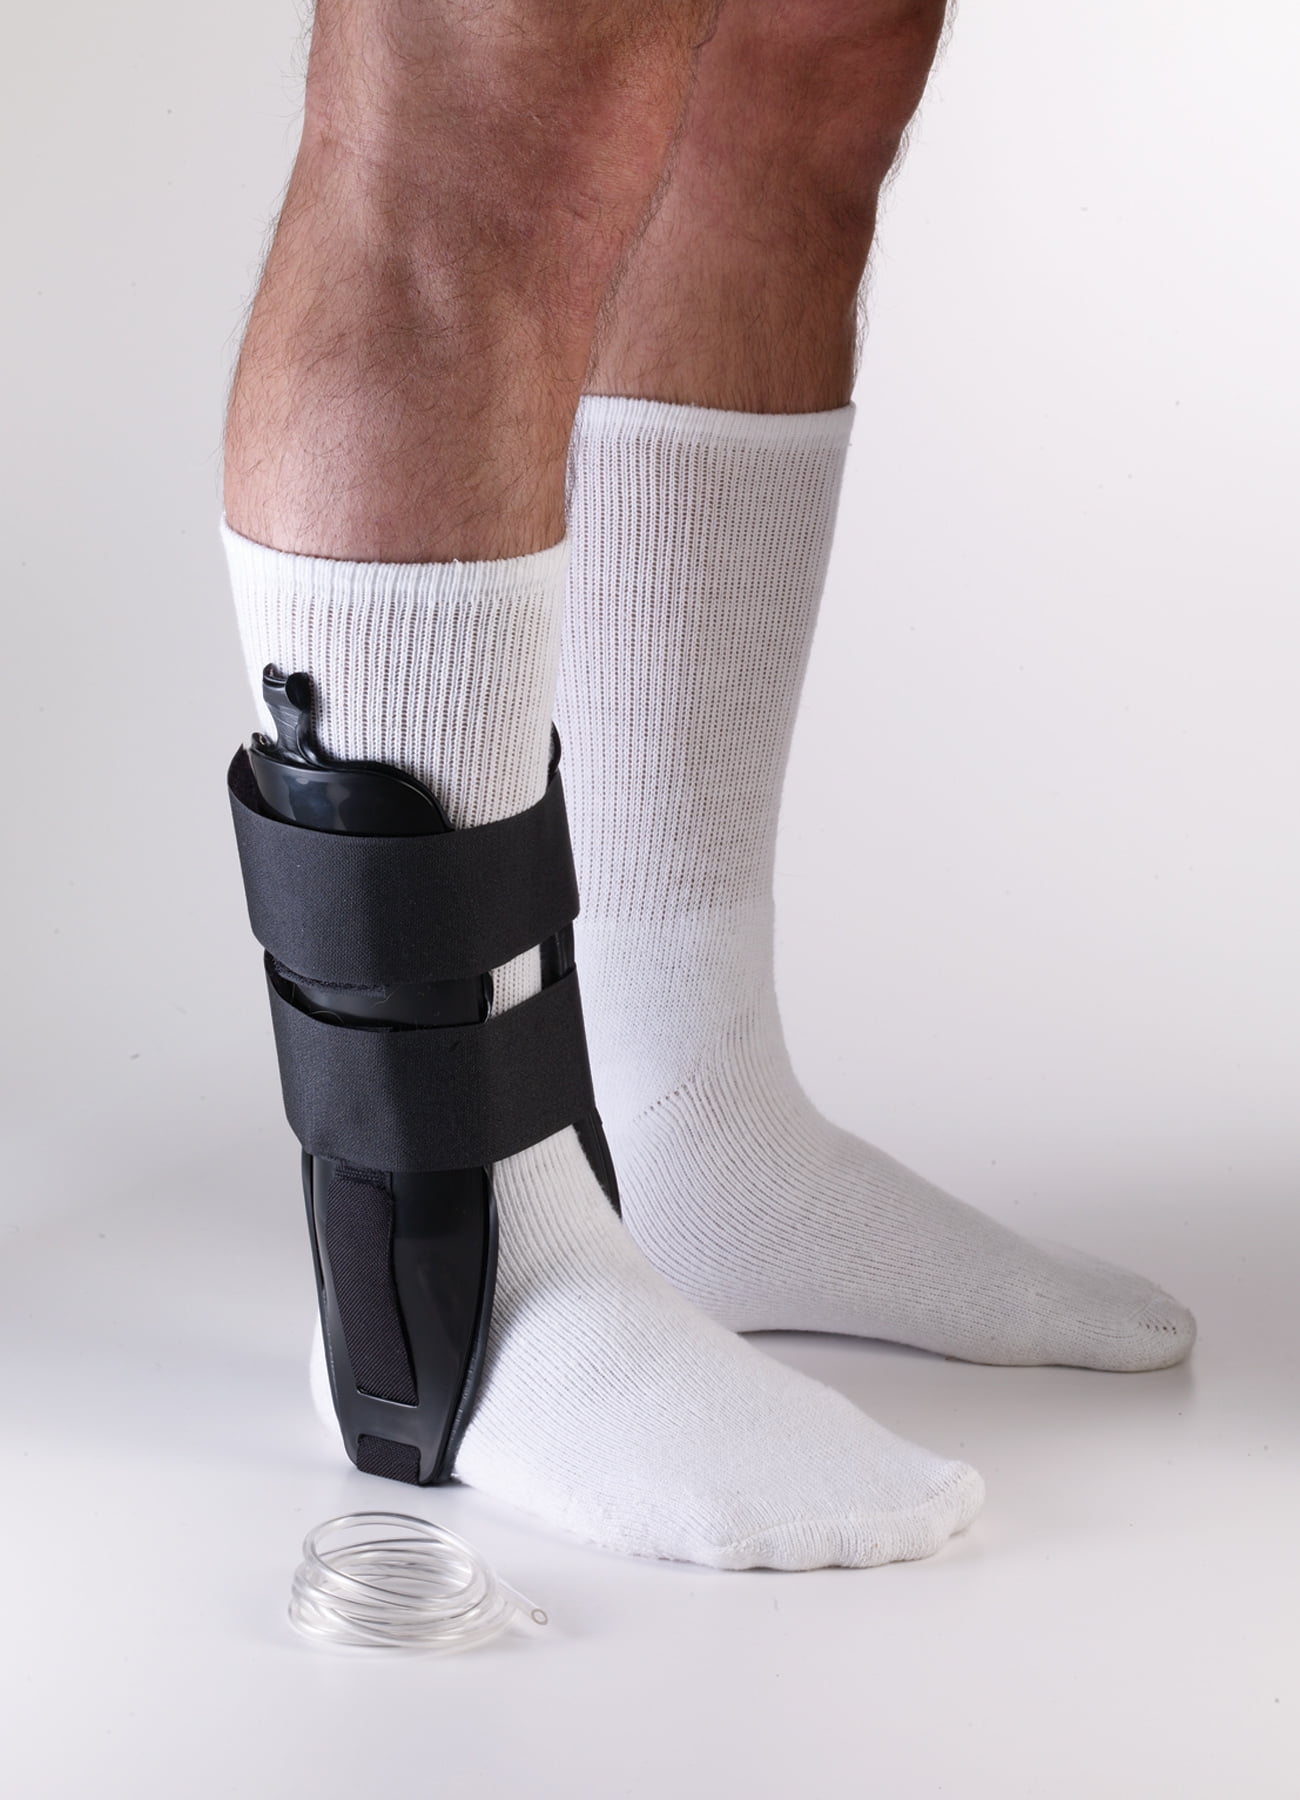 United Surgical Sports Running Athletics Injury Foam Ankle Stirrup Splint 